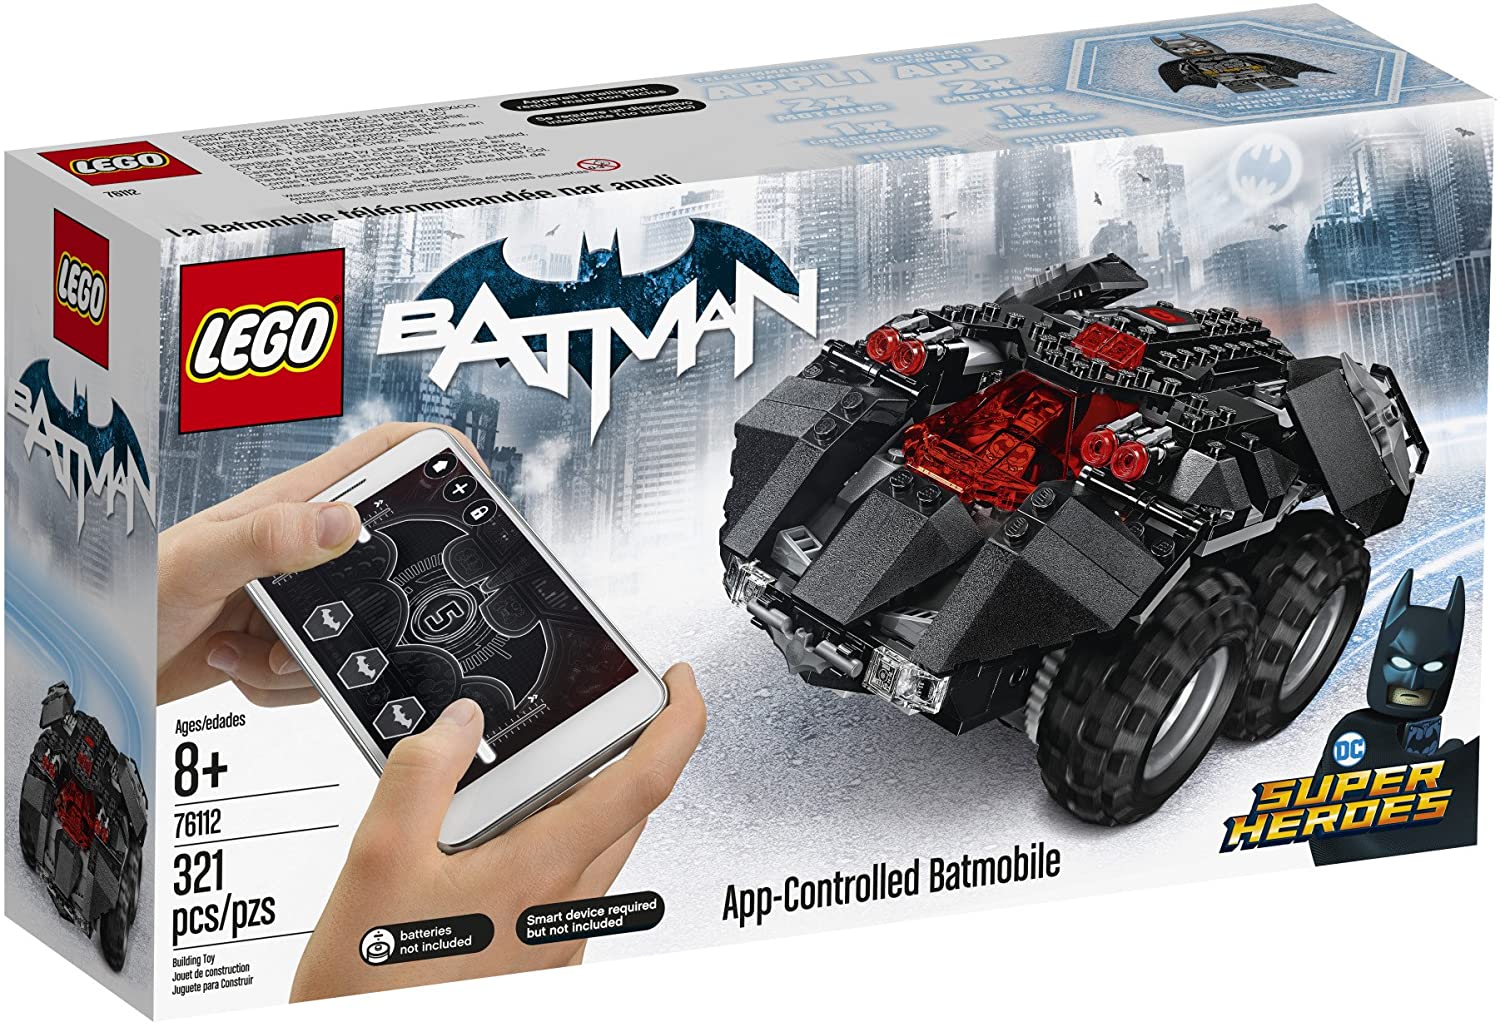 From Denmark】LEGO DC BATMAN Super heroes Batmobile 76112 remote control  (rc) Batman car, construction set and boy toy (321 pieces) guaranteed  Genuine From Denmark 